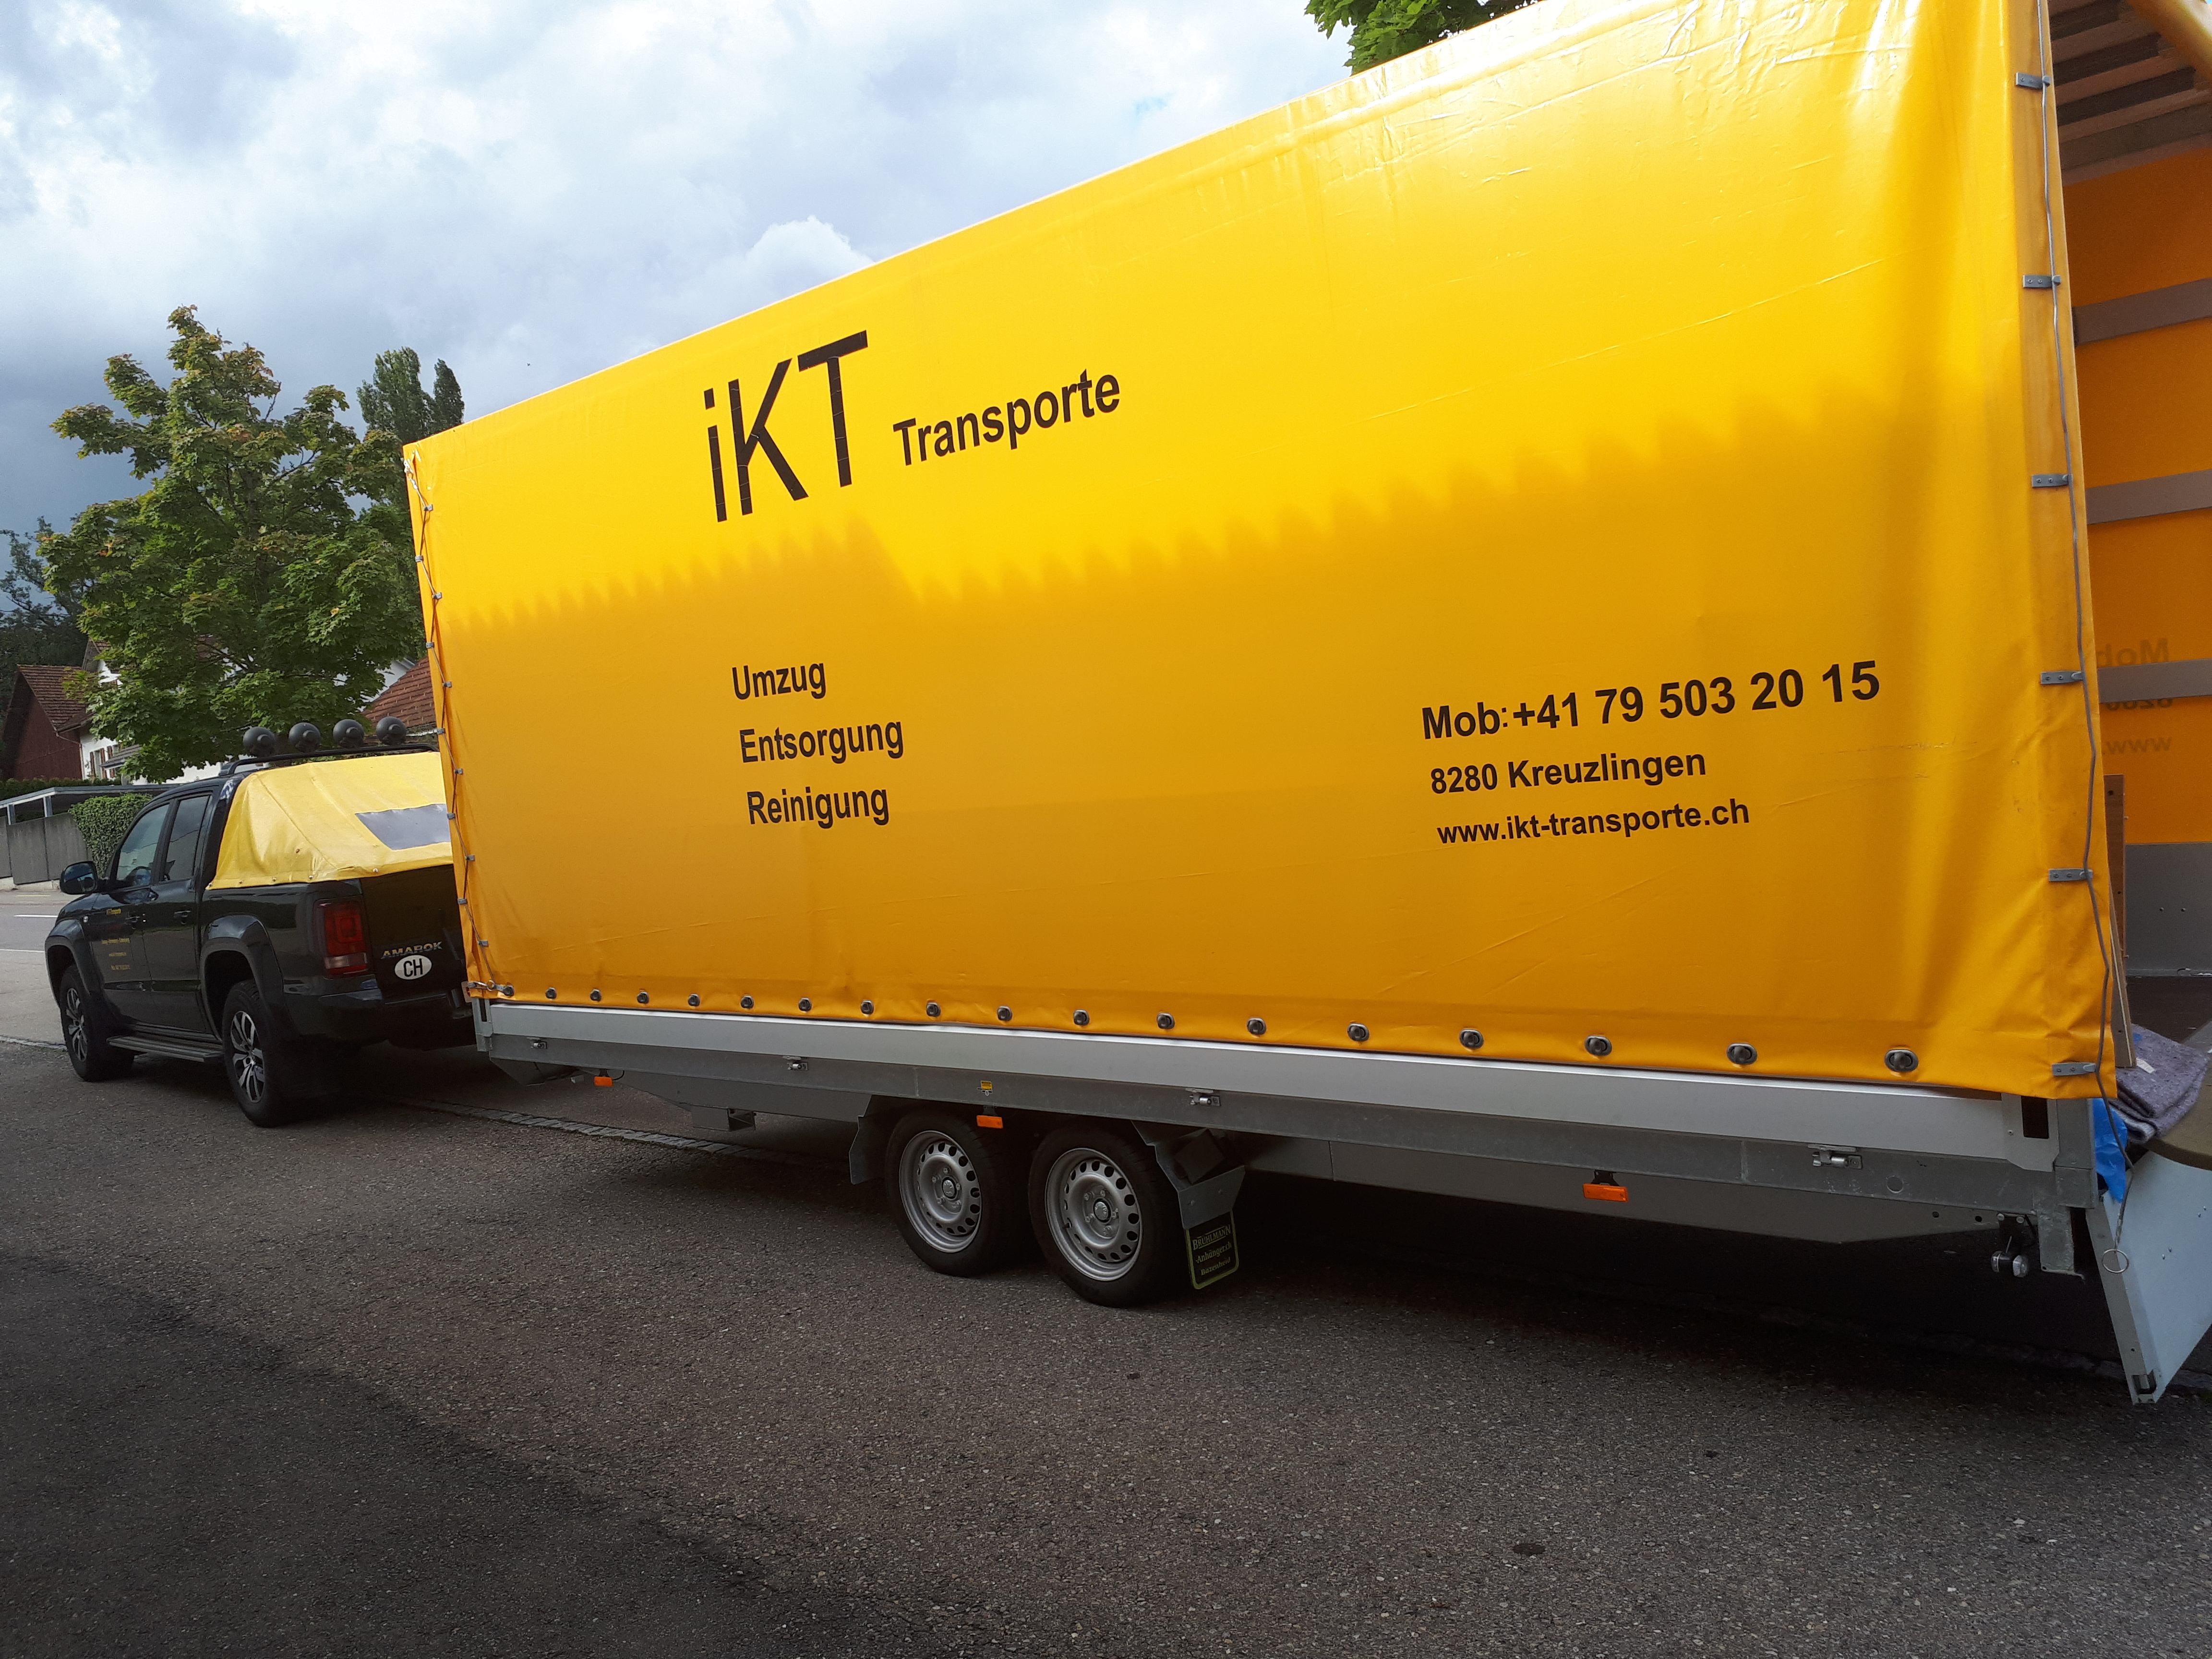 (c) Ikt-transporte.ch